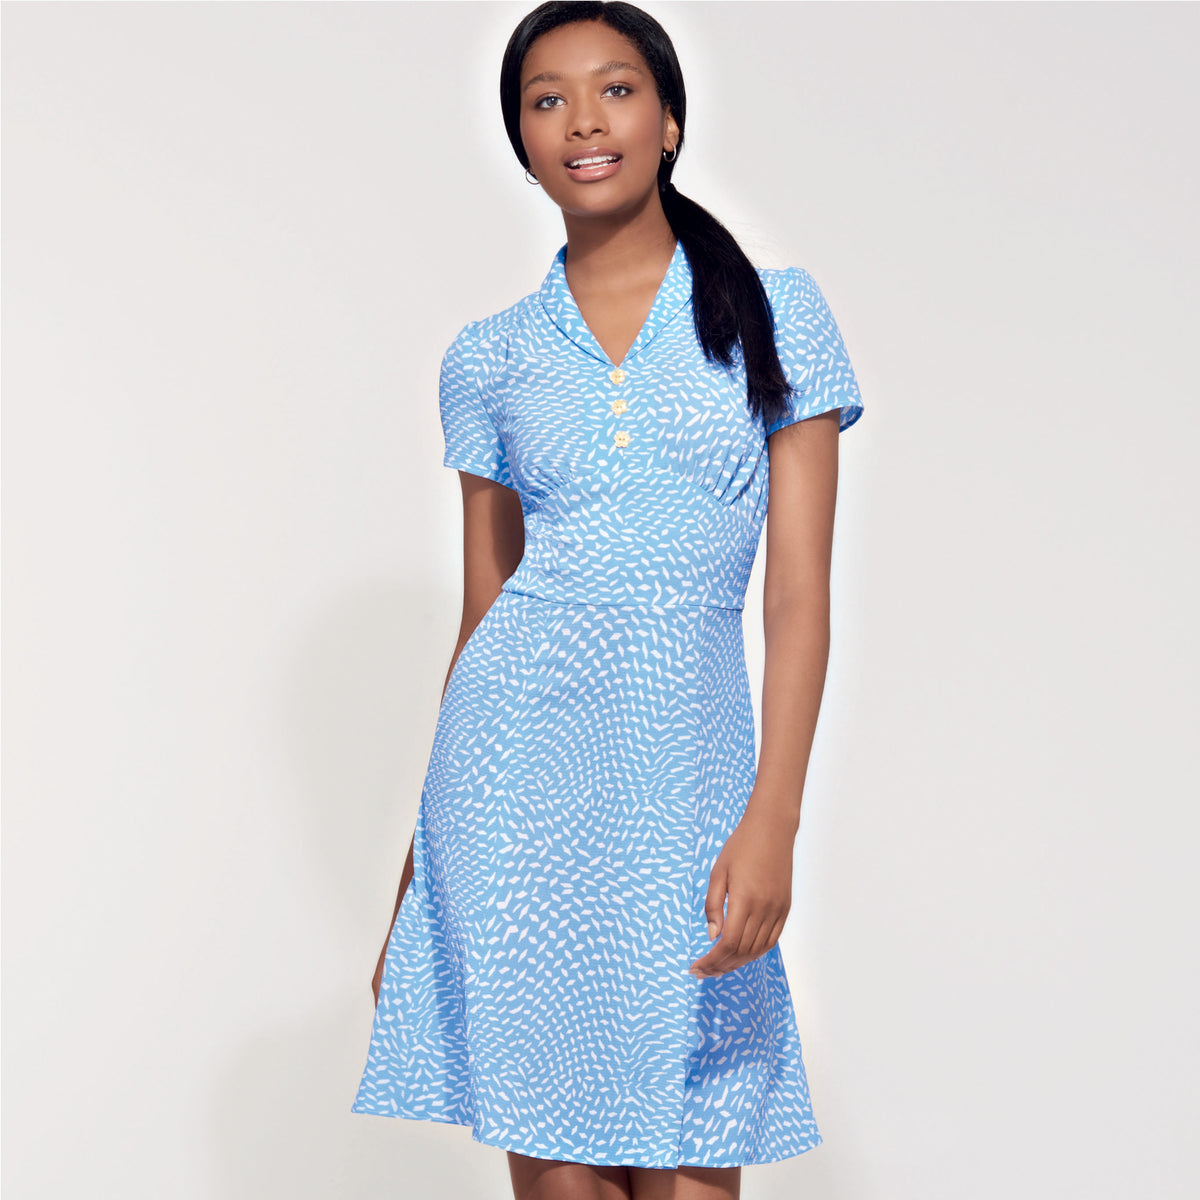 6594 New Look Sewing Pattern N6594 Misses' Dress In Three Lengths